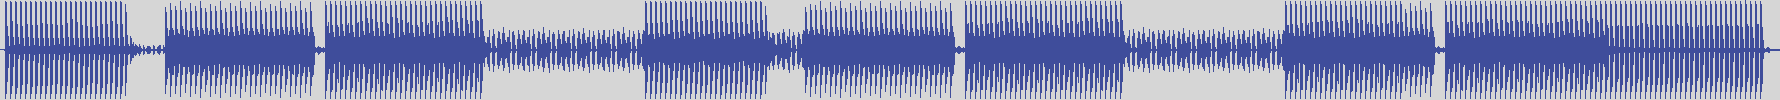 nf_boyz_records [NFY068] Pasqualini Gotti - Demisexual [Original Mix] audio wave form